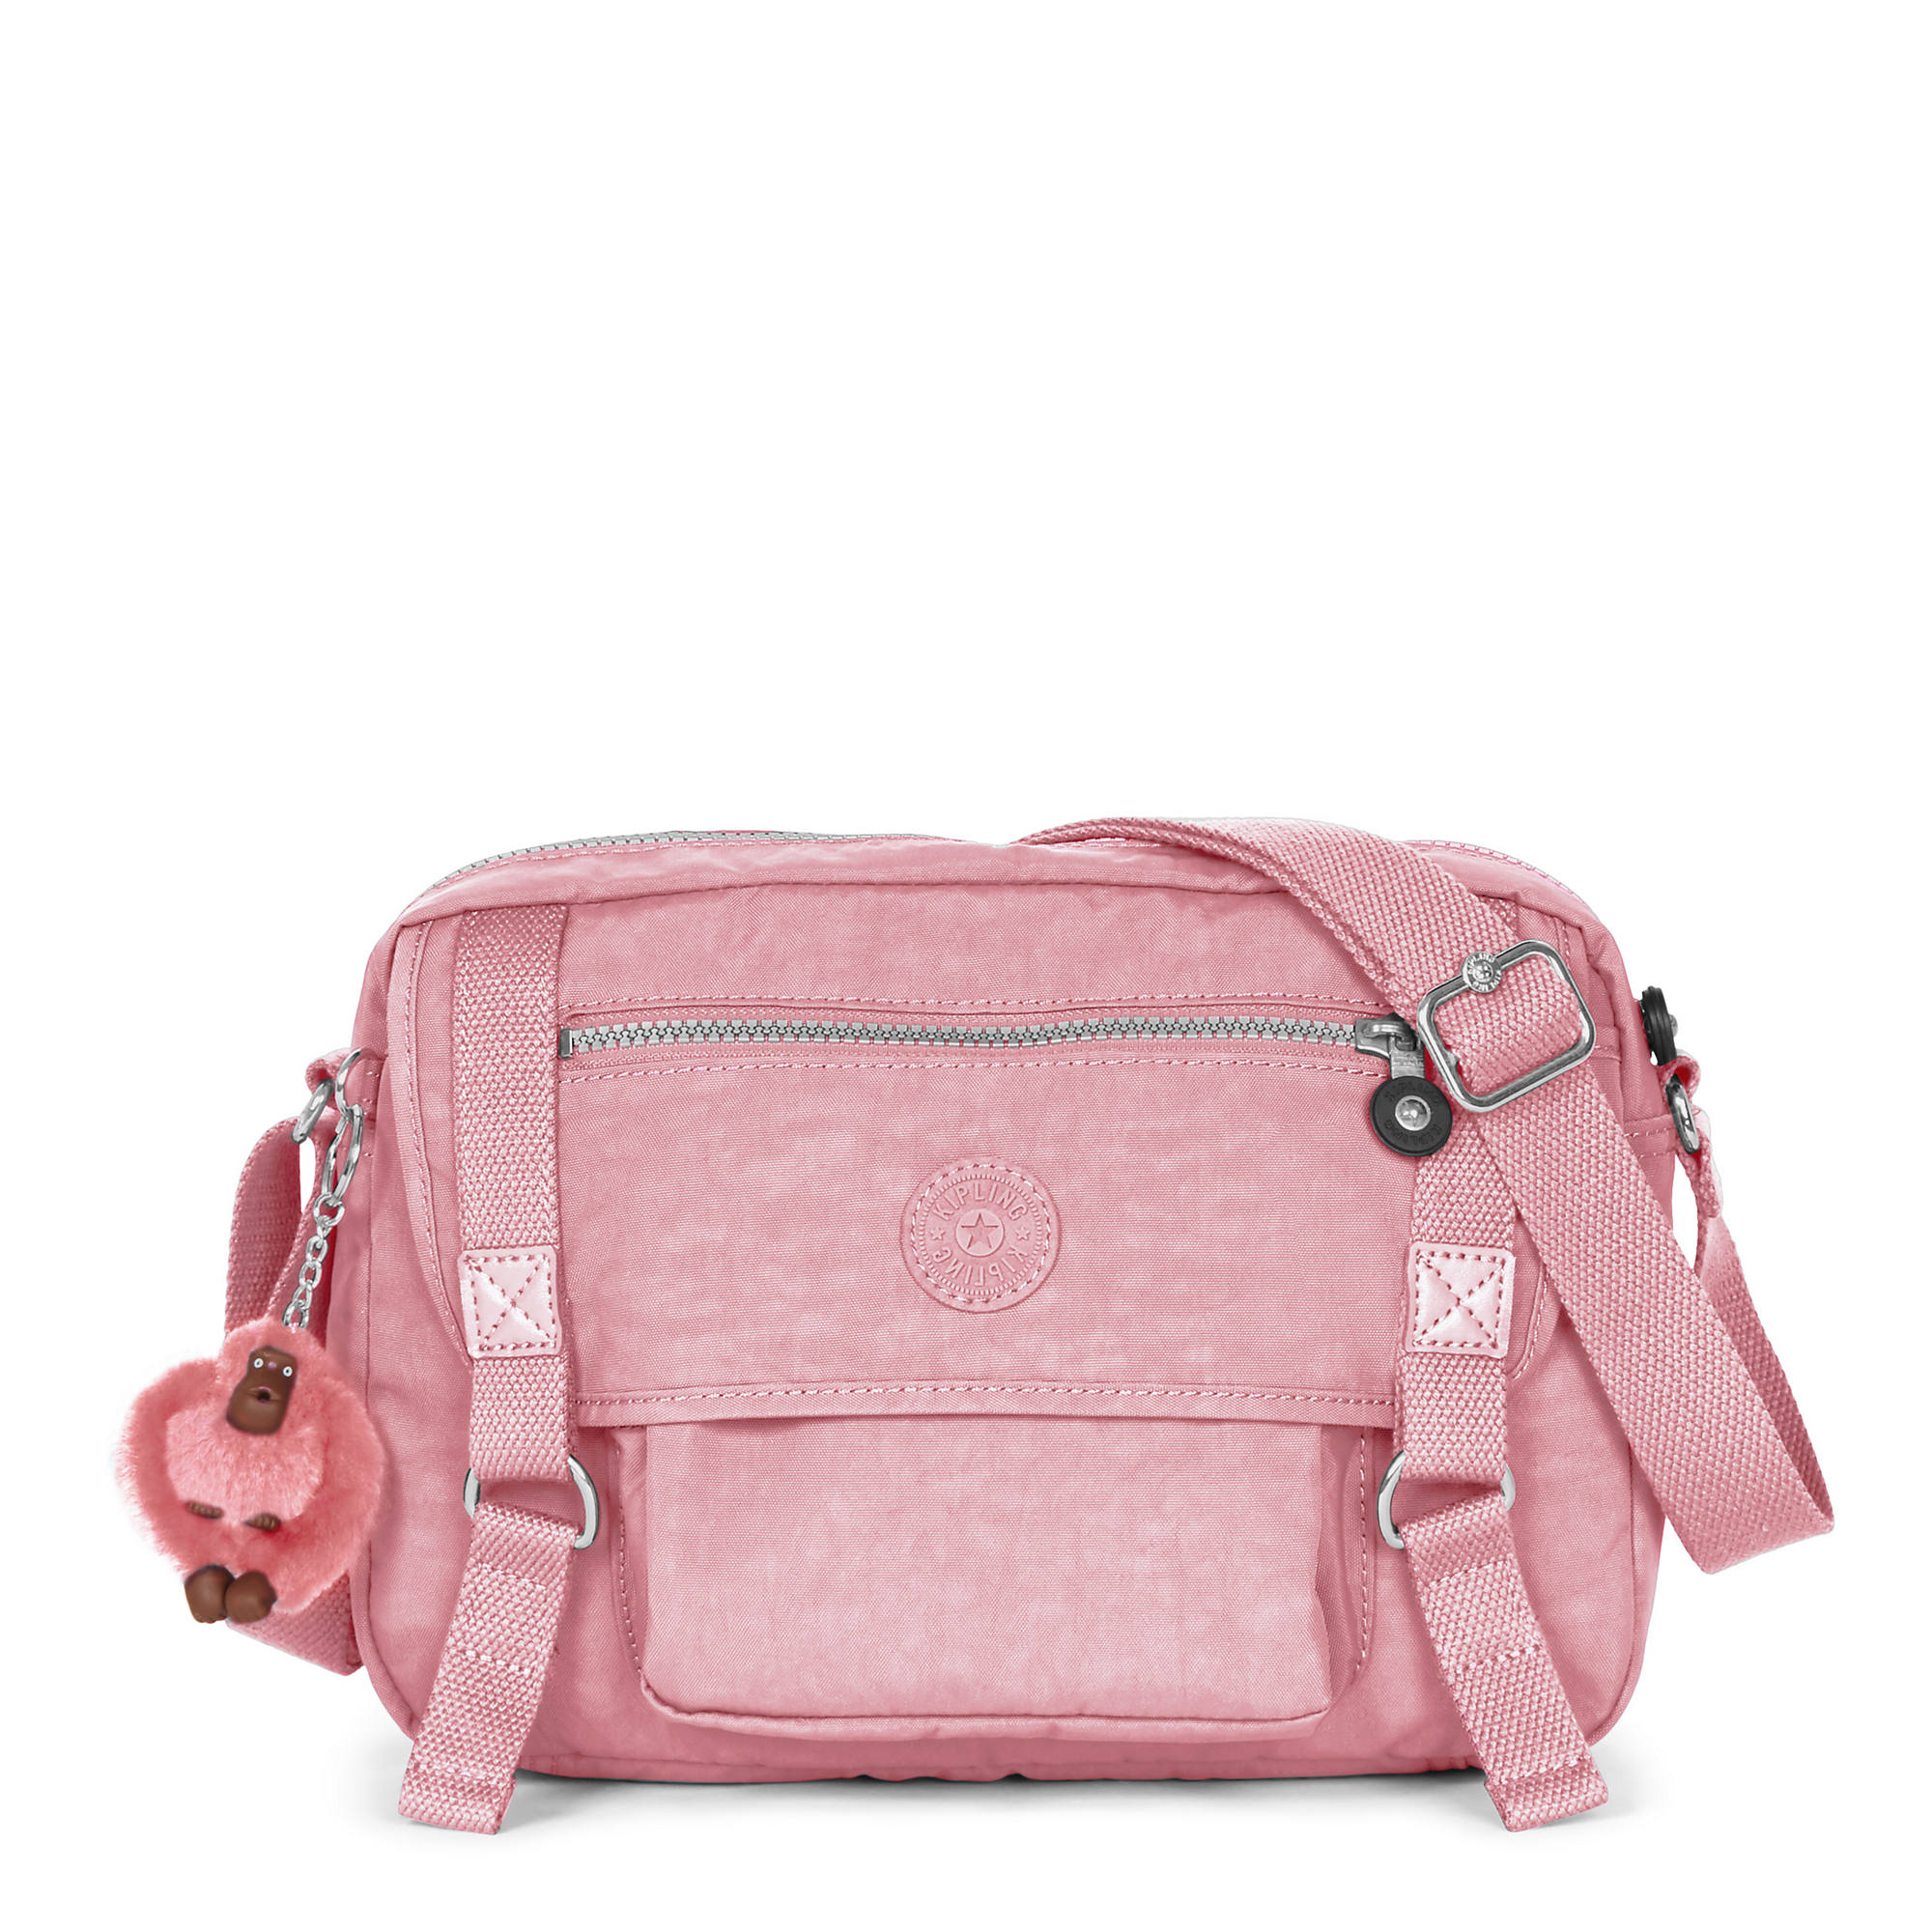 Kipling Handbags Uk Qvc - Style Guru: Fashion, Glitz, Glamour, Style ...